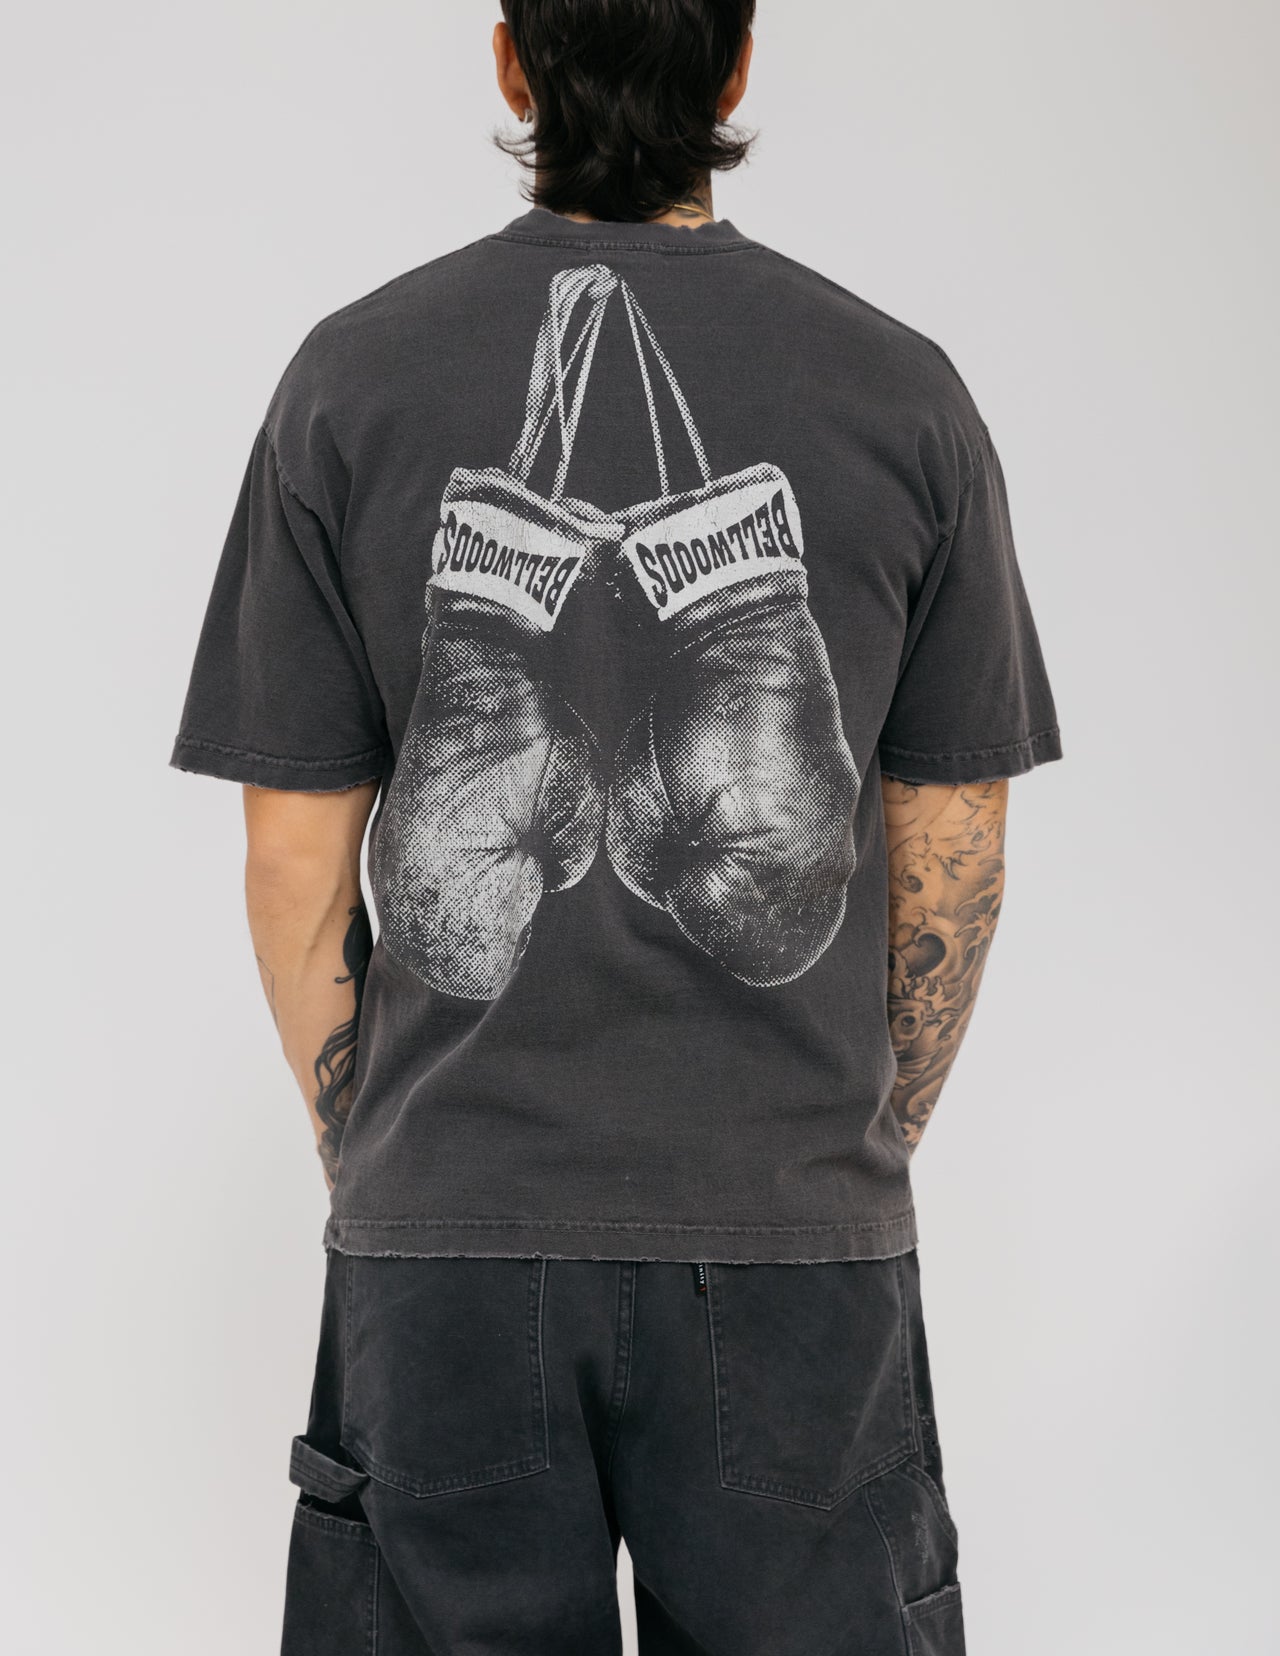 Vintage Black Boxing Gloves Tee